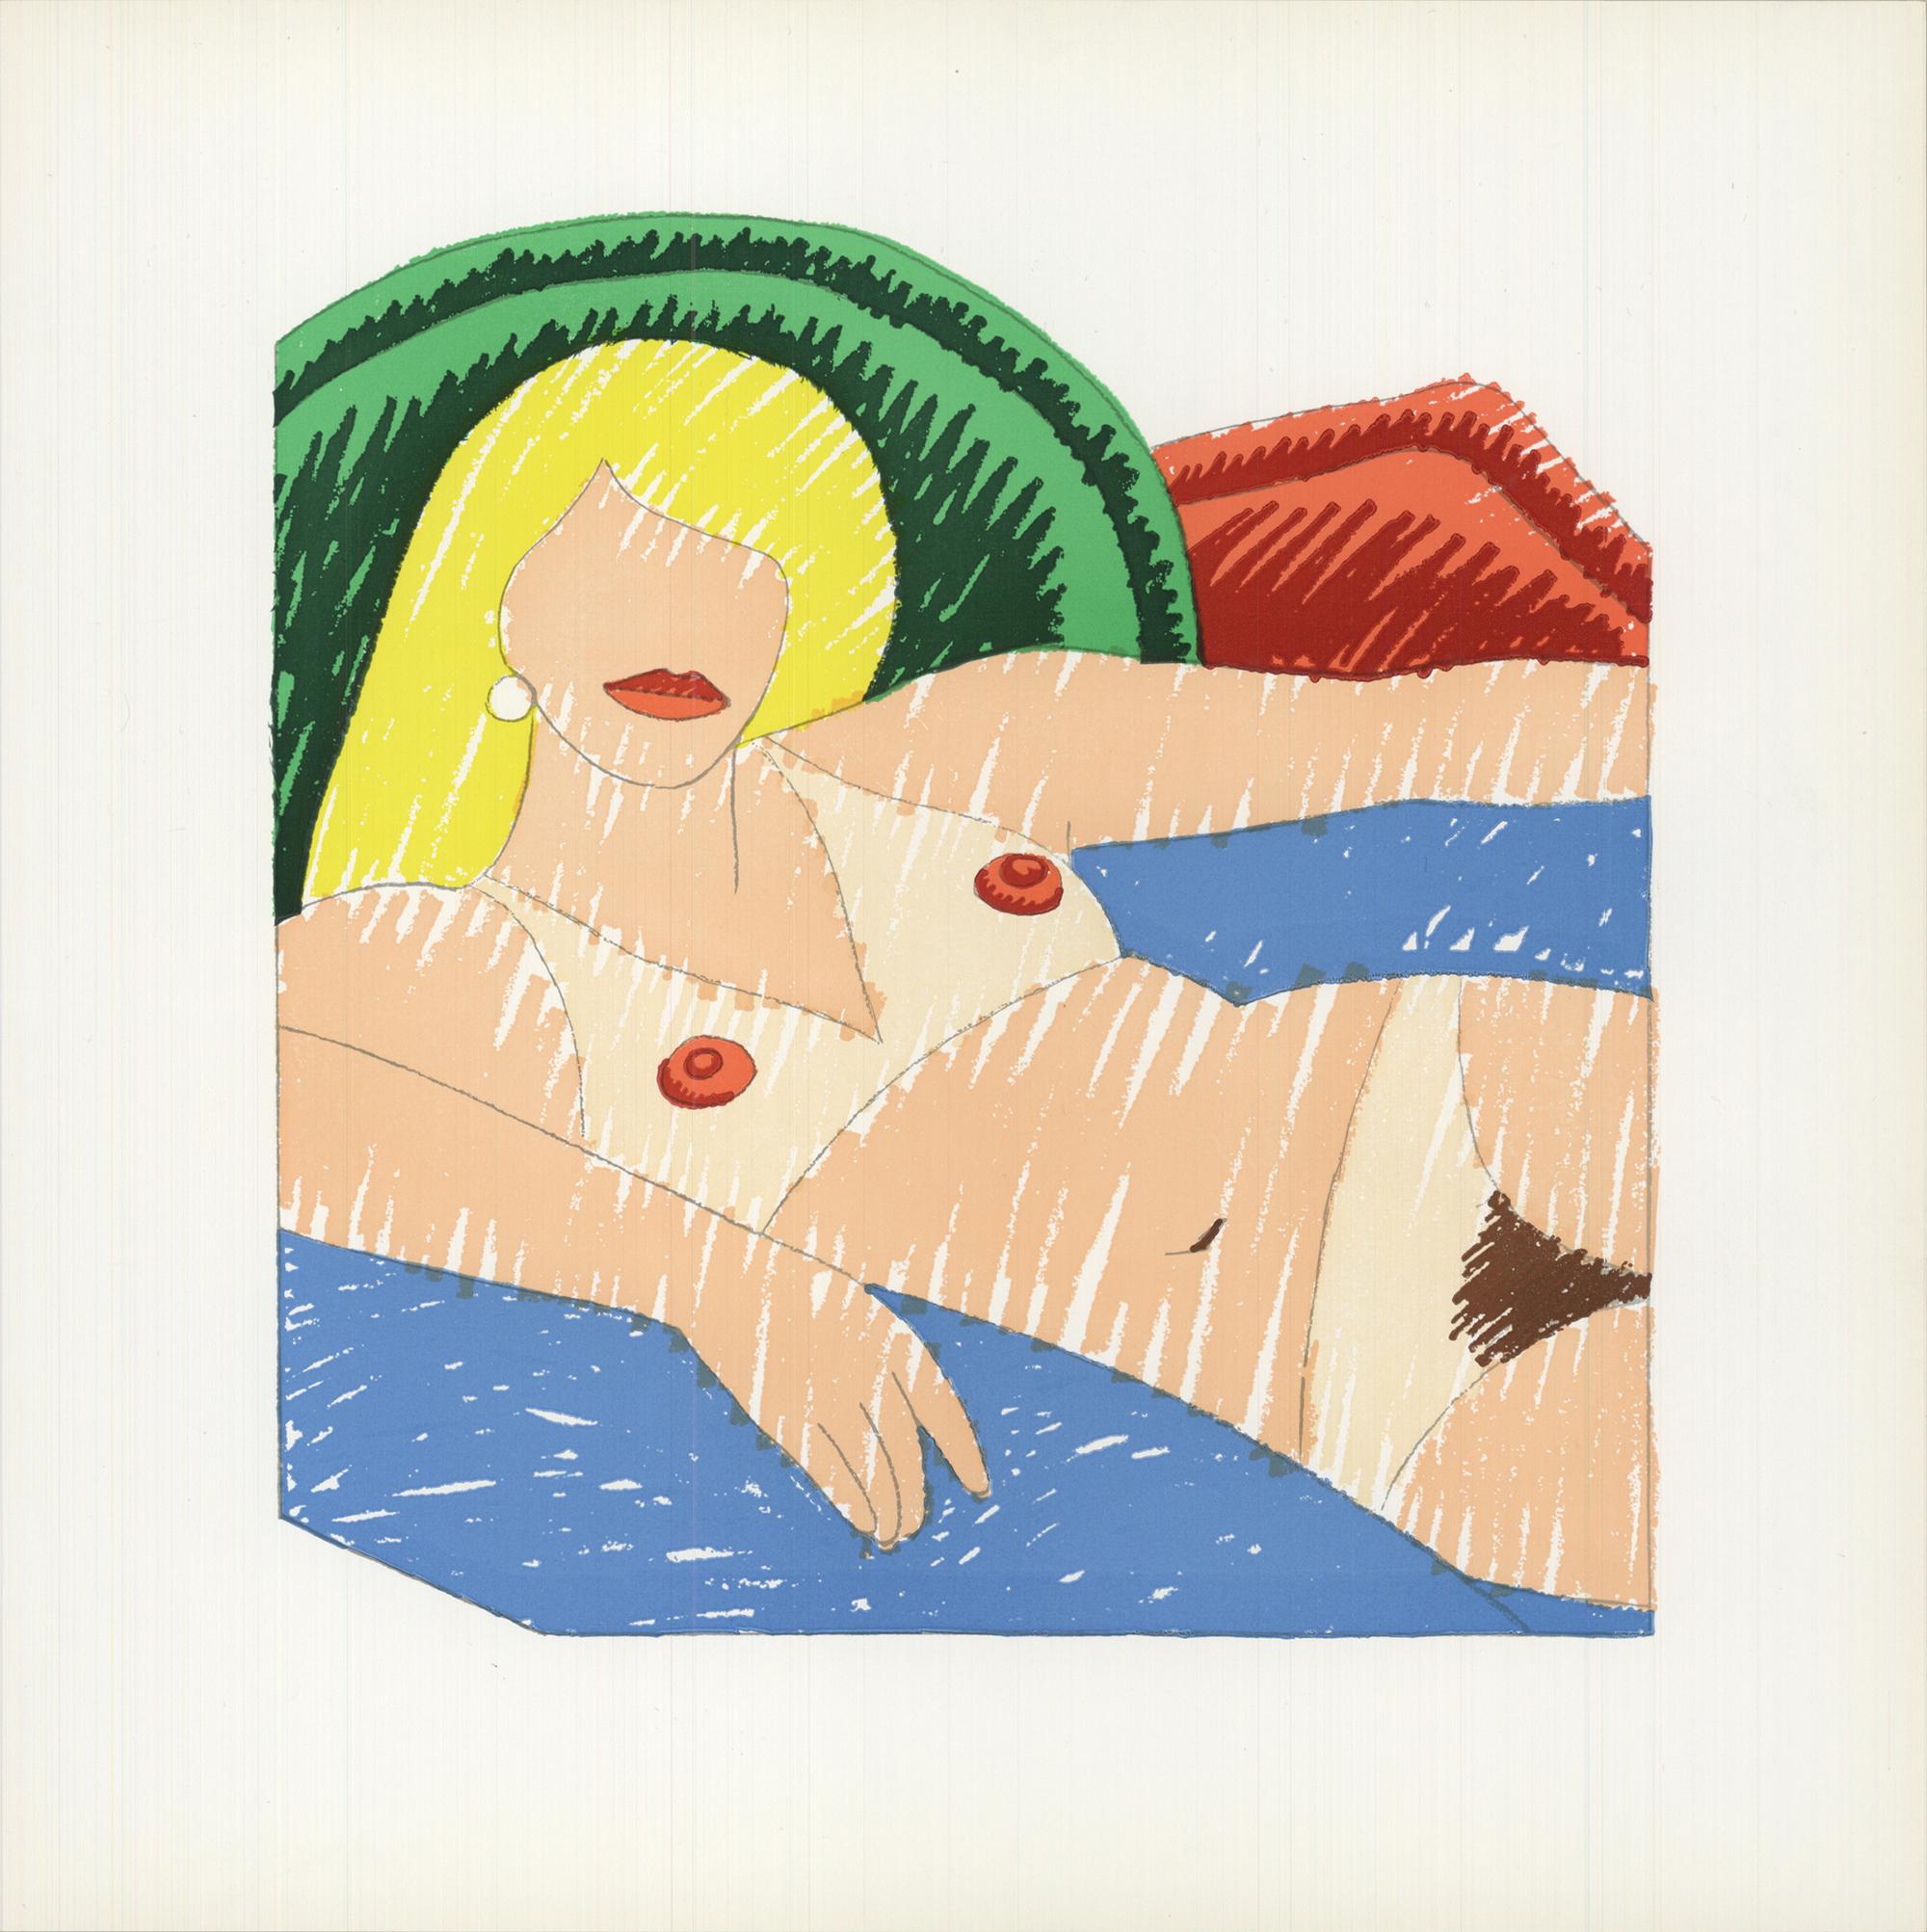 Tom Wesselmann Nude Print - Shiny Nude lithograph